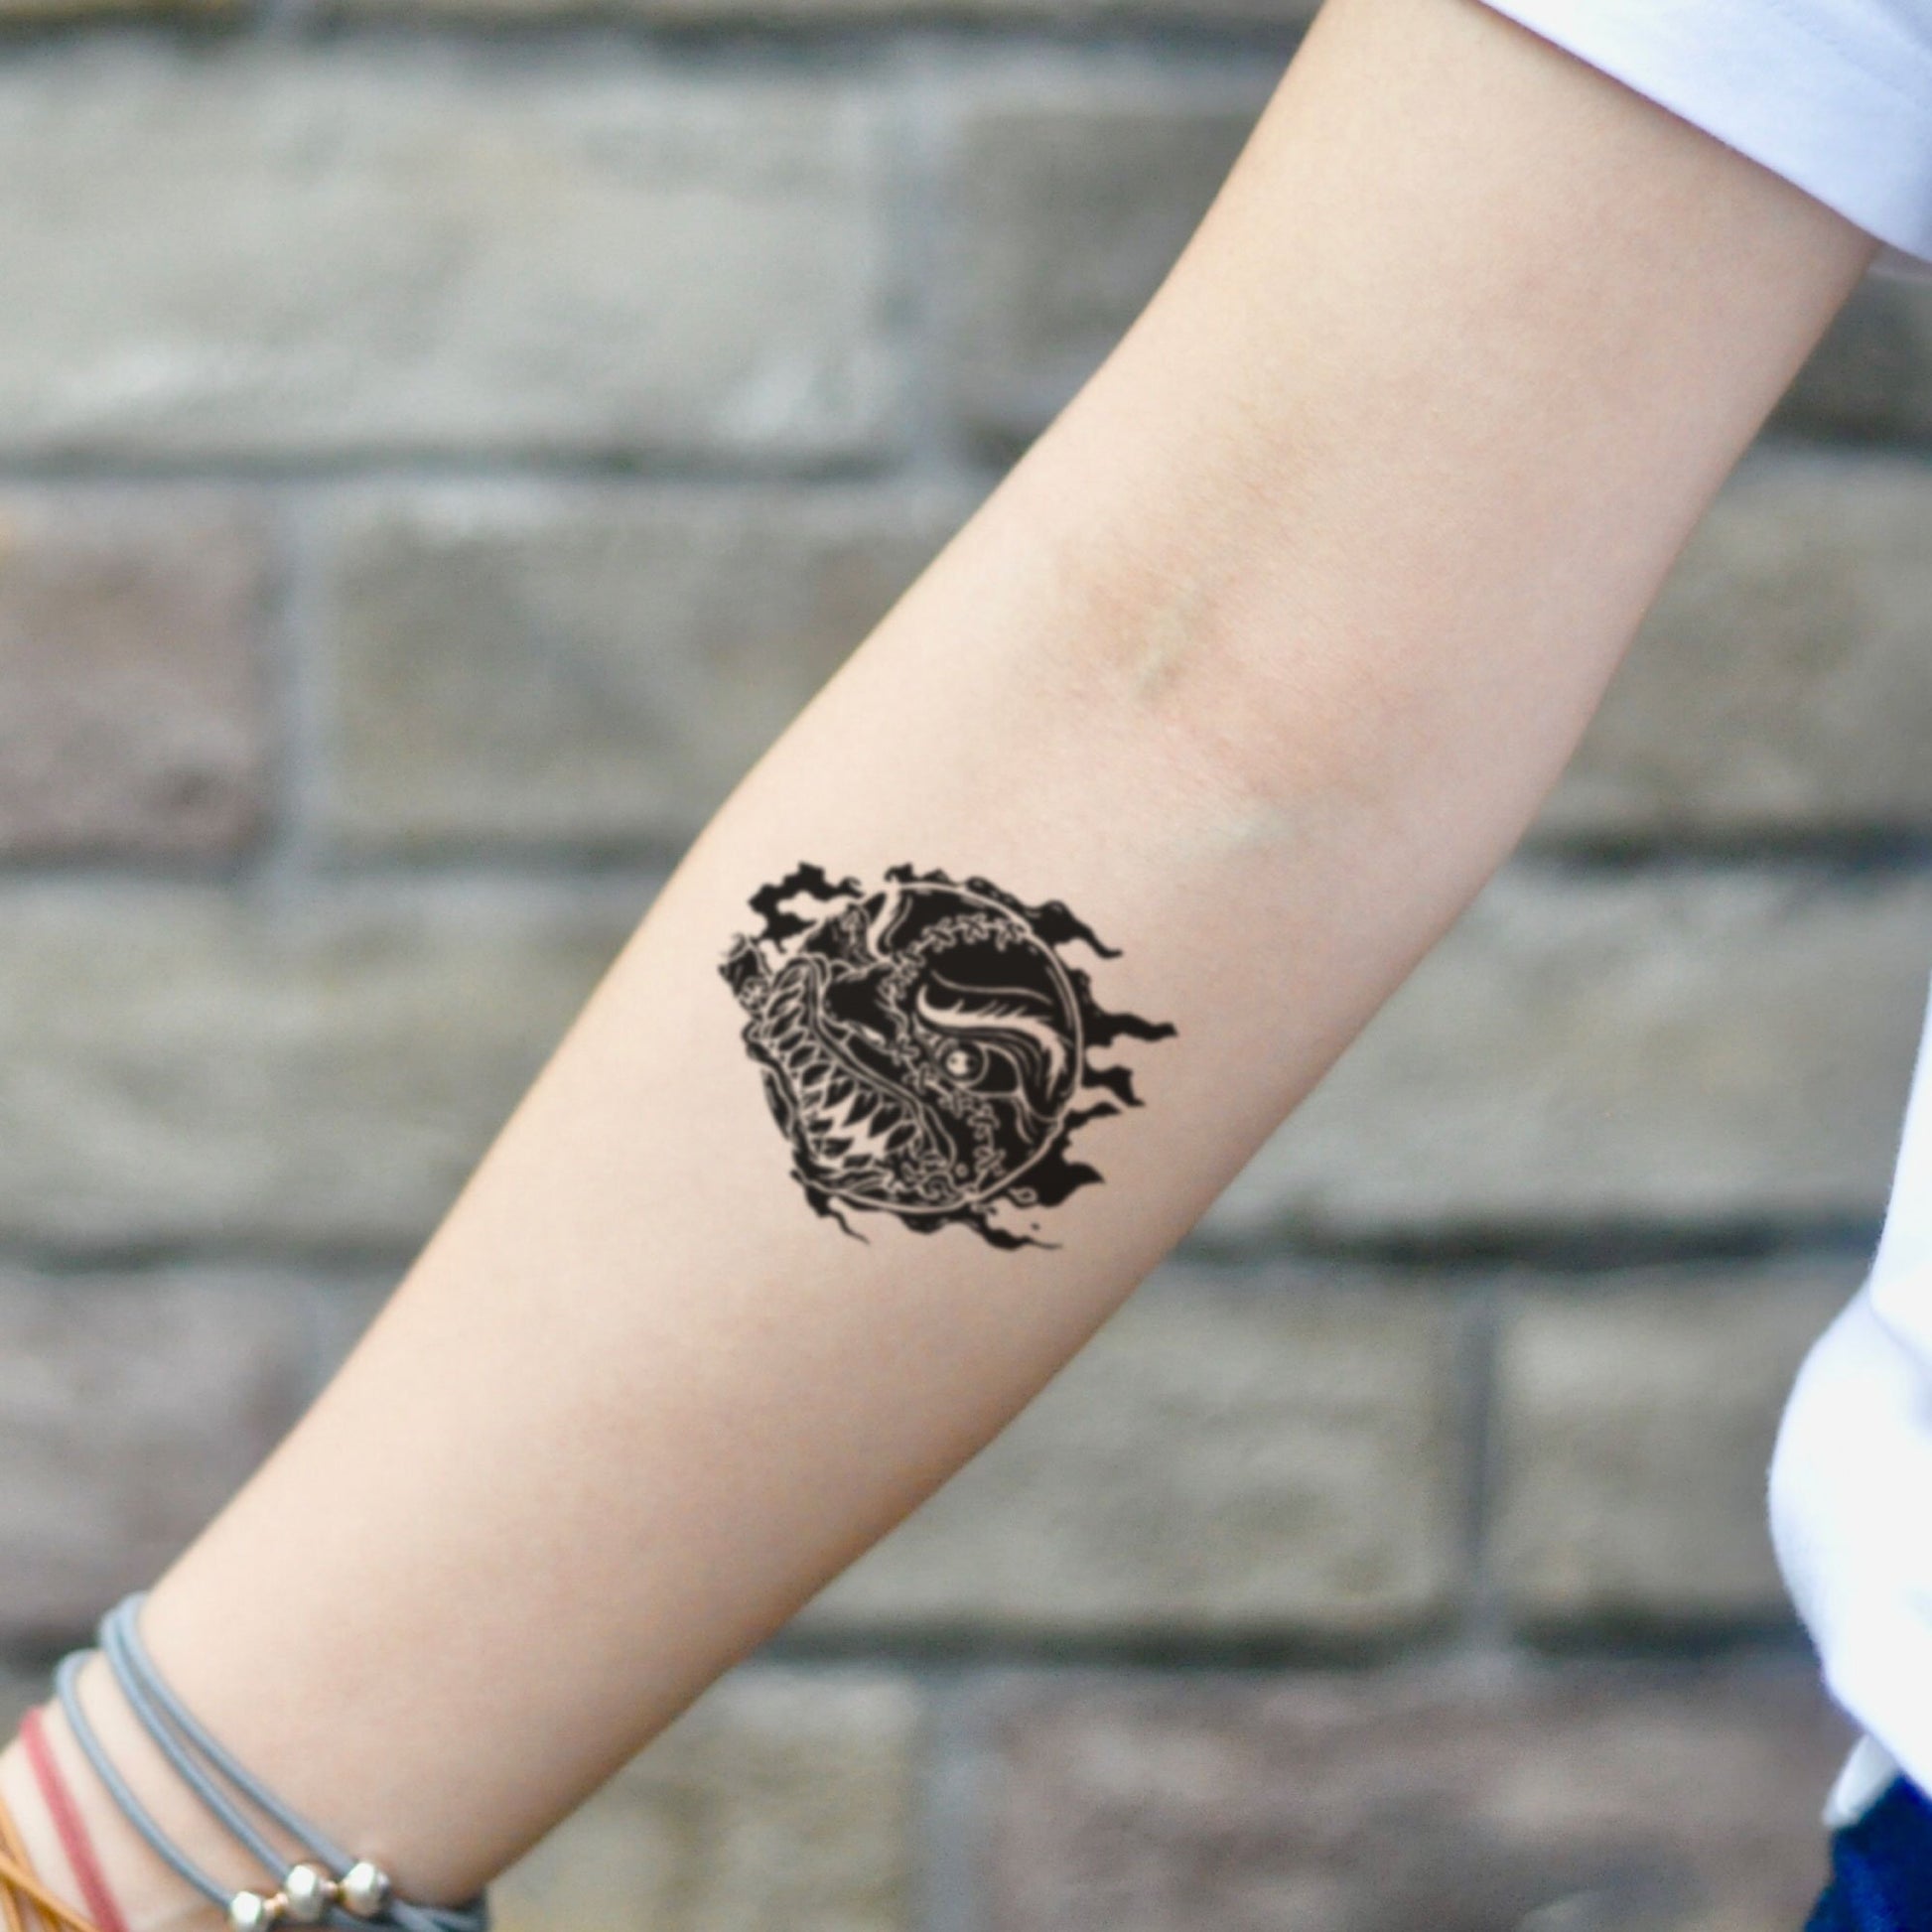 fake small madball illustrative temporary tattoo sticker design idea on inner arm